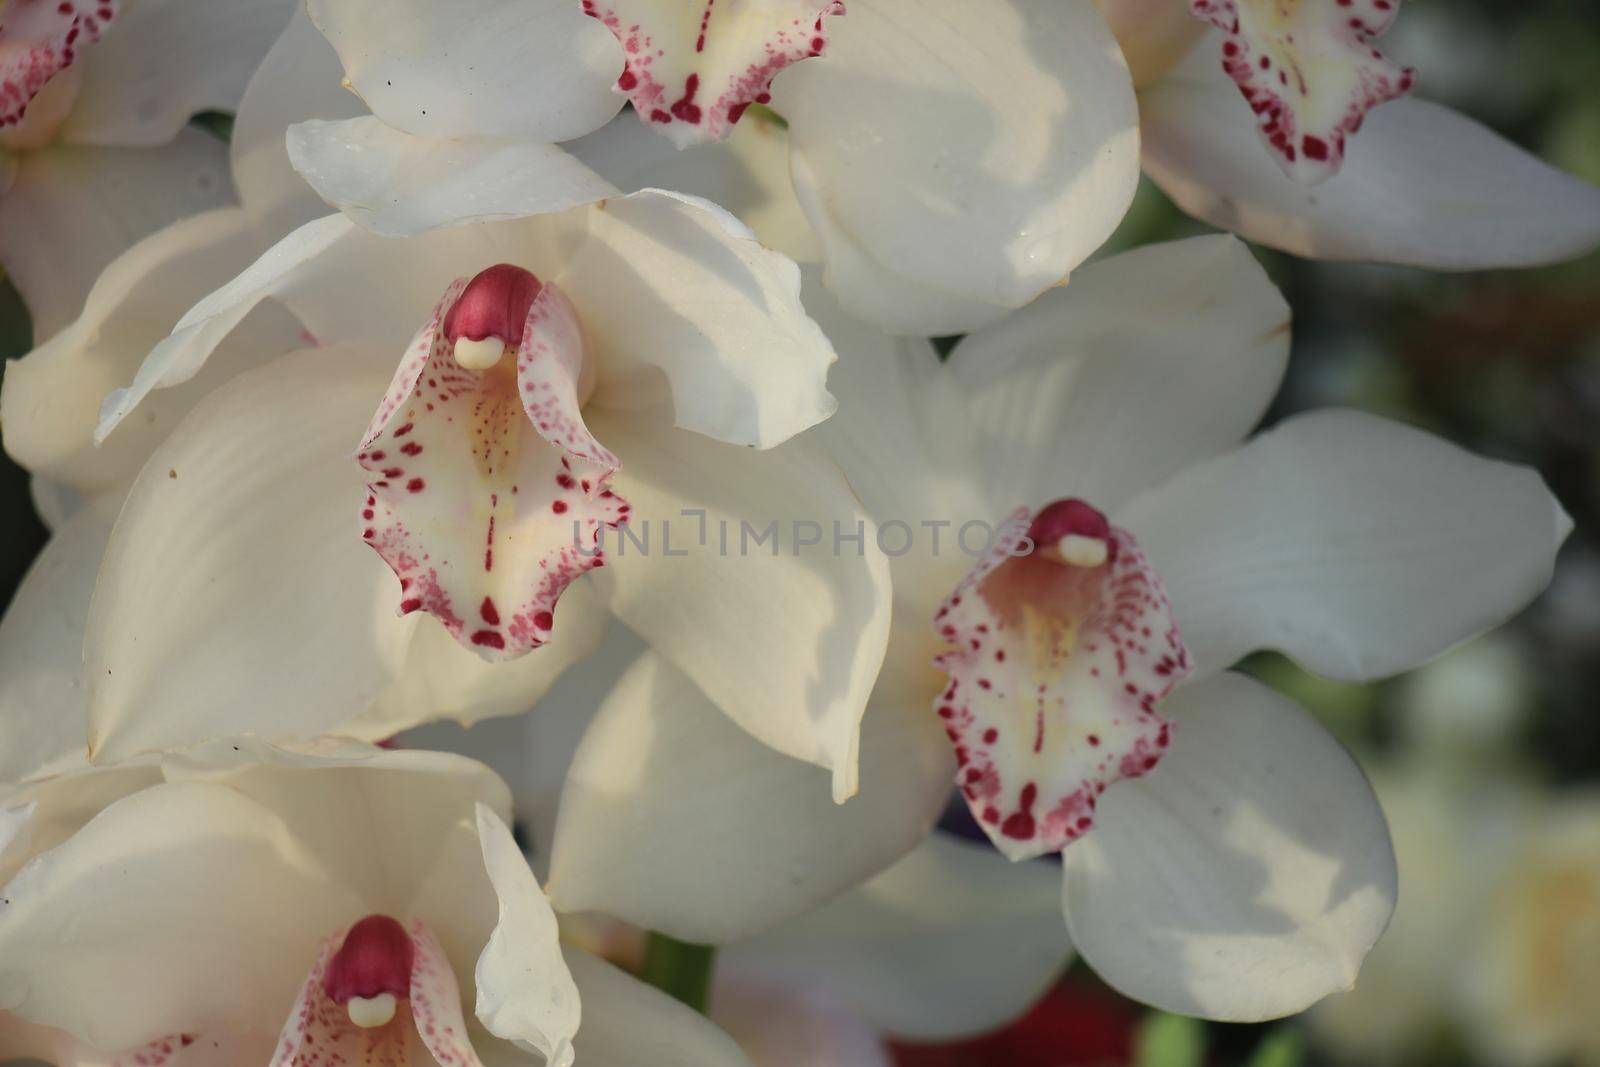 White Cymbidium orchids in a bridal floral arrangement by studioportosabbia